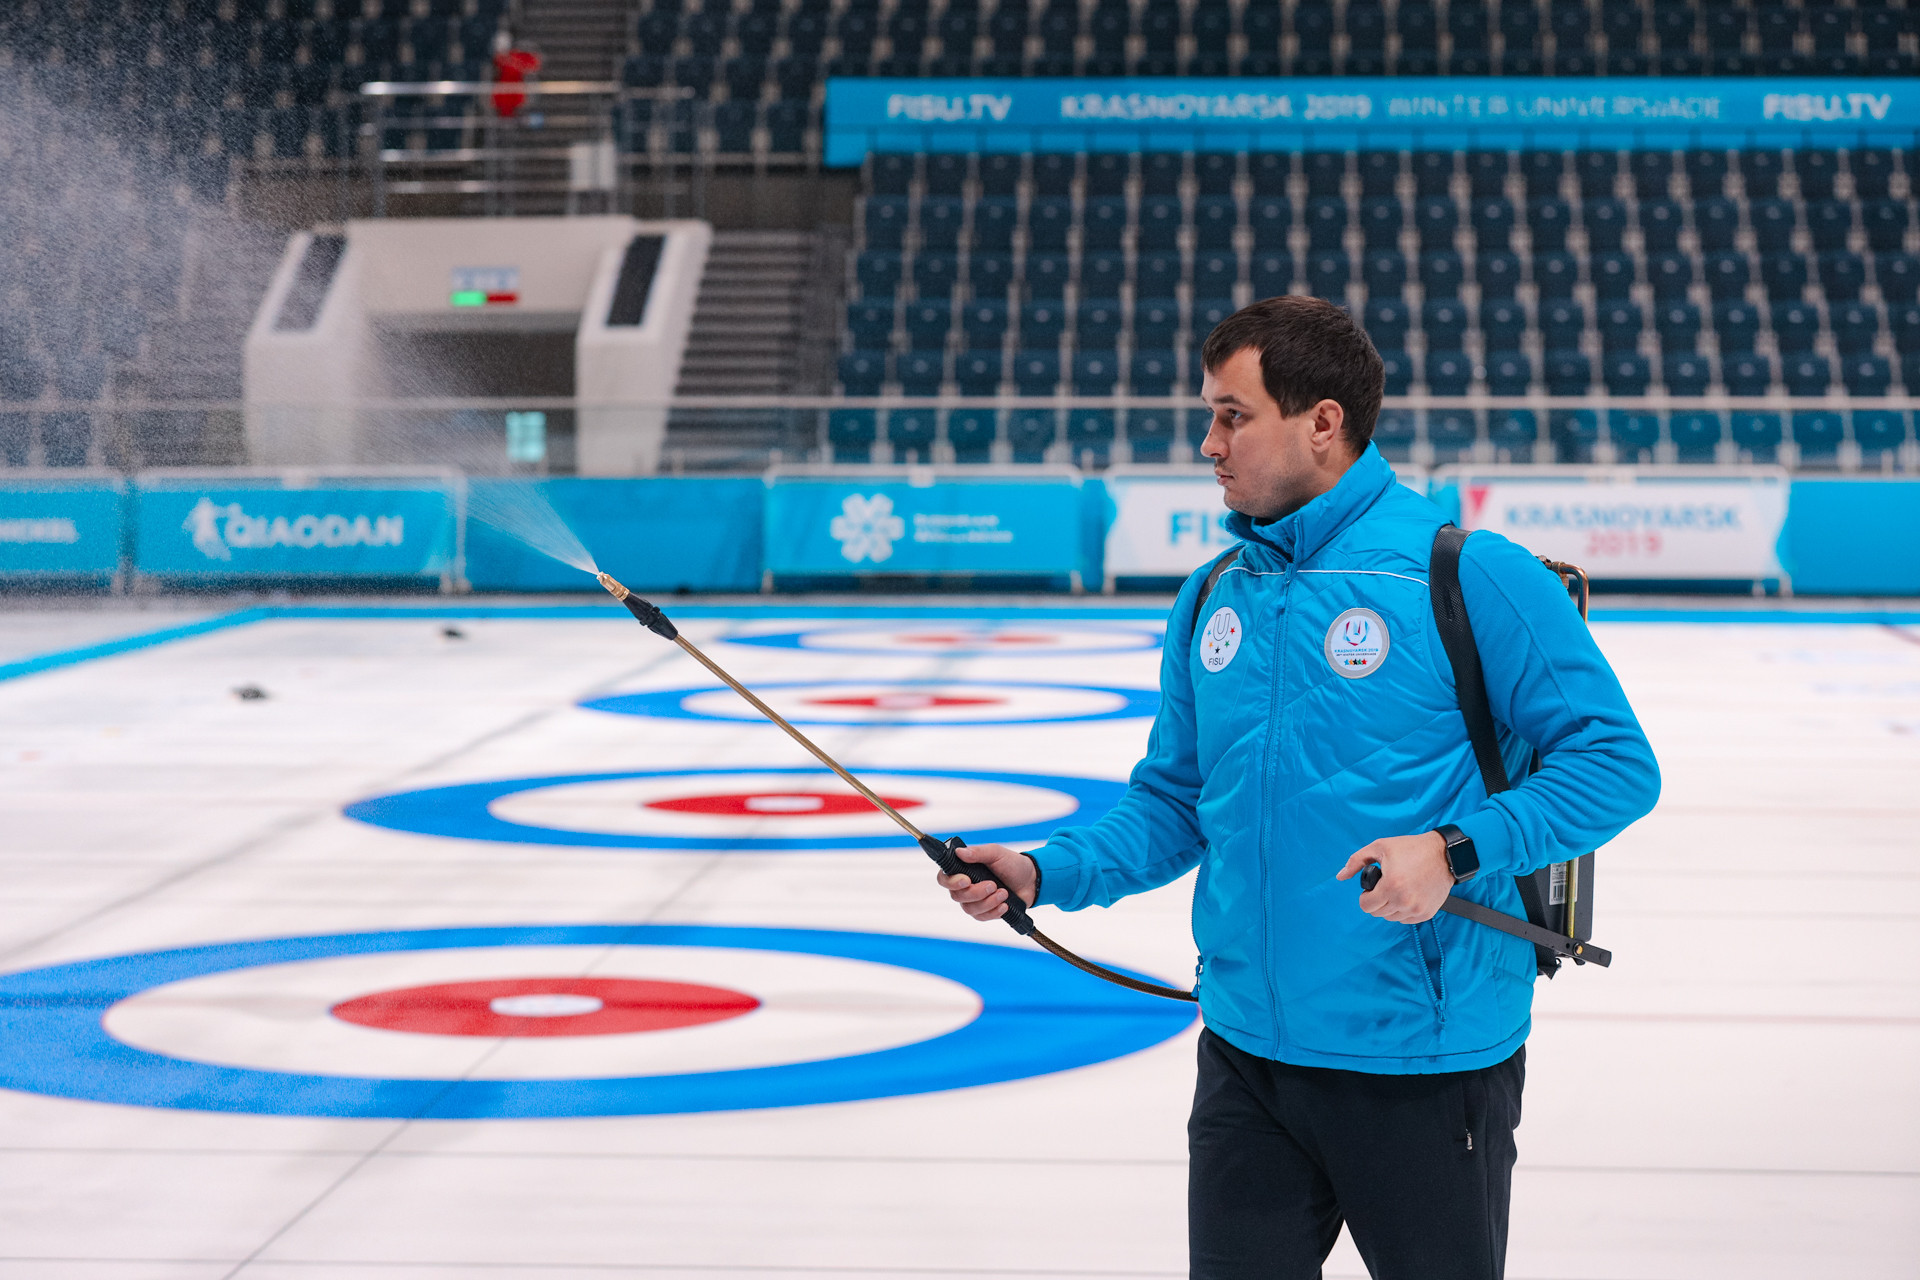 Organisers conclude preparations for curling tournaments at Krasnoyarsk 2019 Winter Universiade